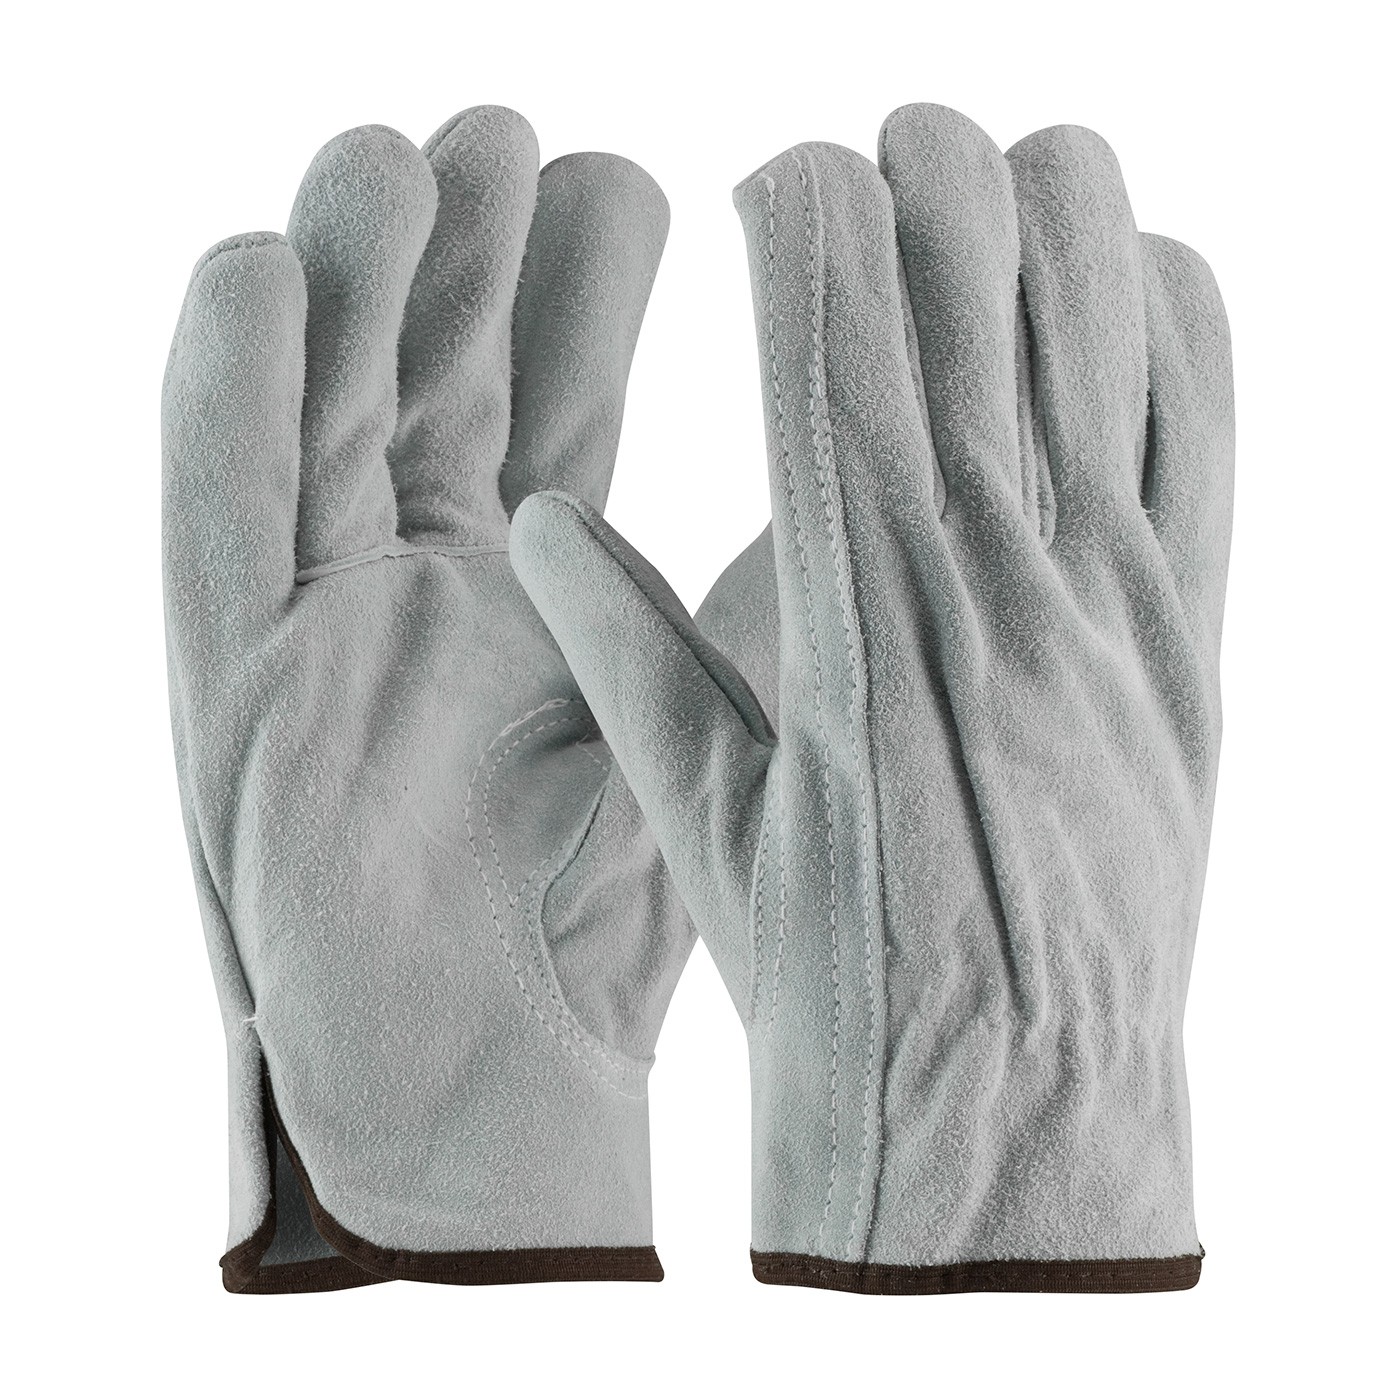 PIP® Premium Grade Split Cowhide Leather Drivers Glove - Keystone Thumb  (#69-189)